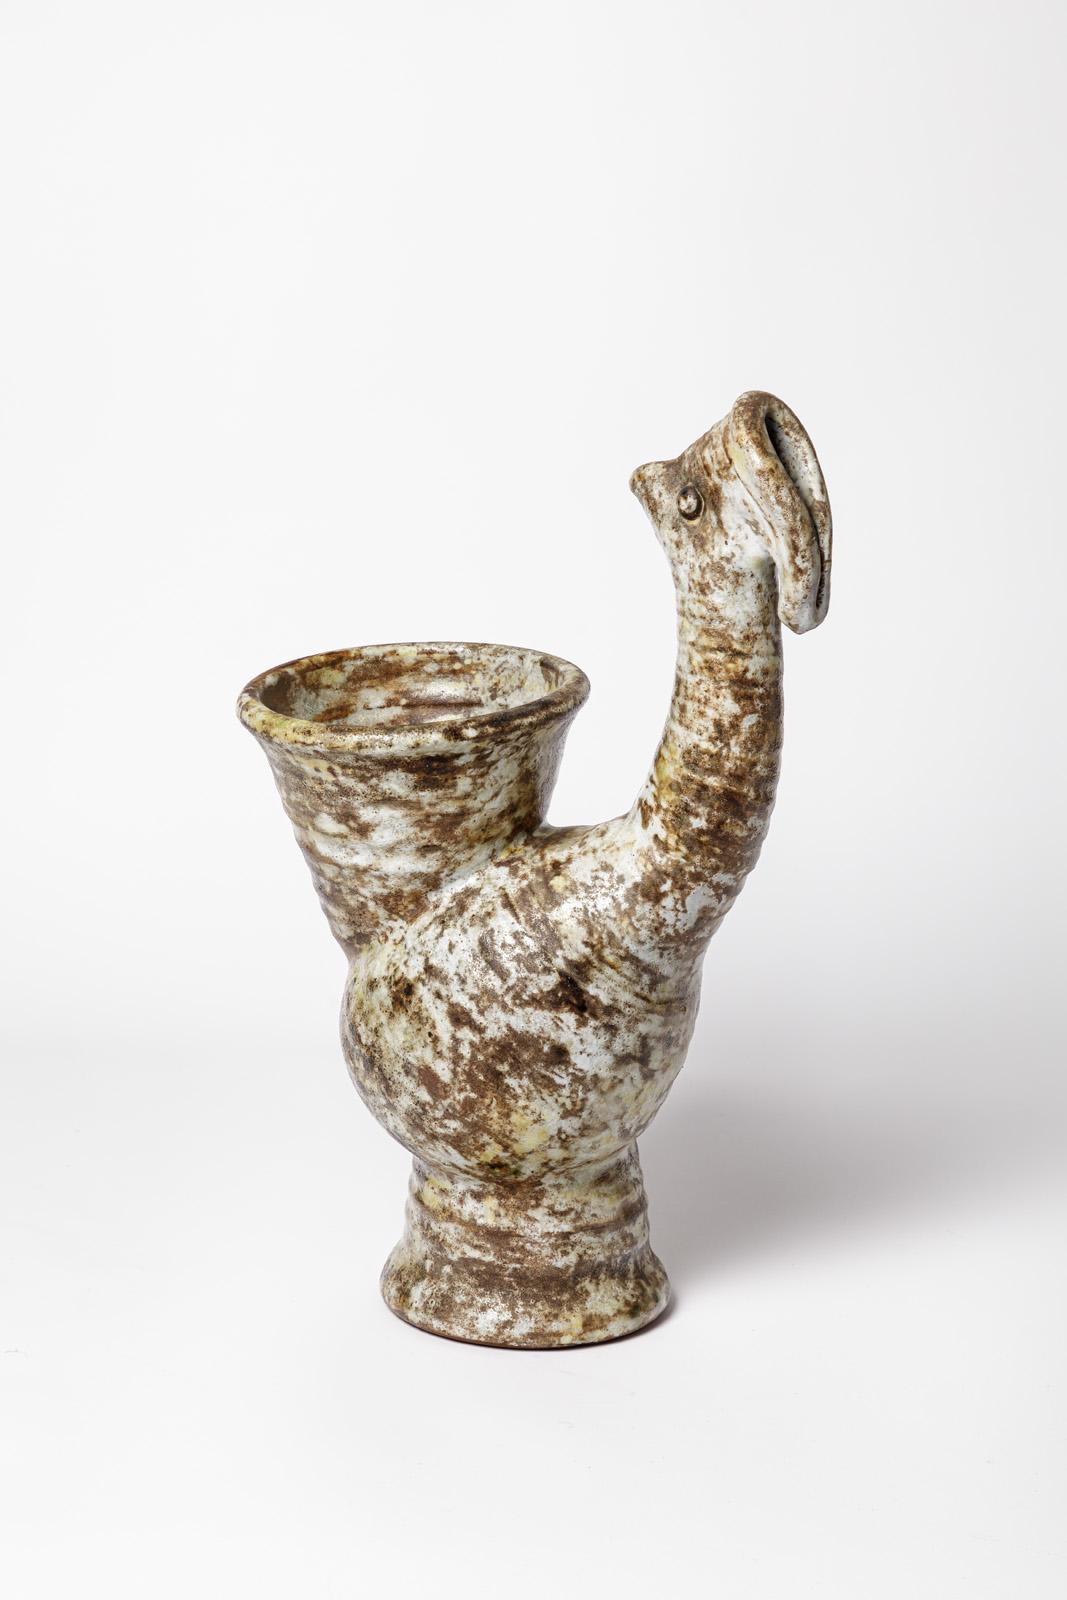 Mid-Century Modern Large XXth Century Bird Ceramic Vase or Sculpture by Alexandre Kostanda 1950 For Sale